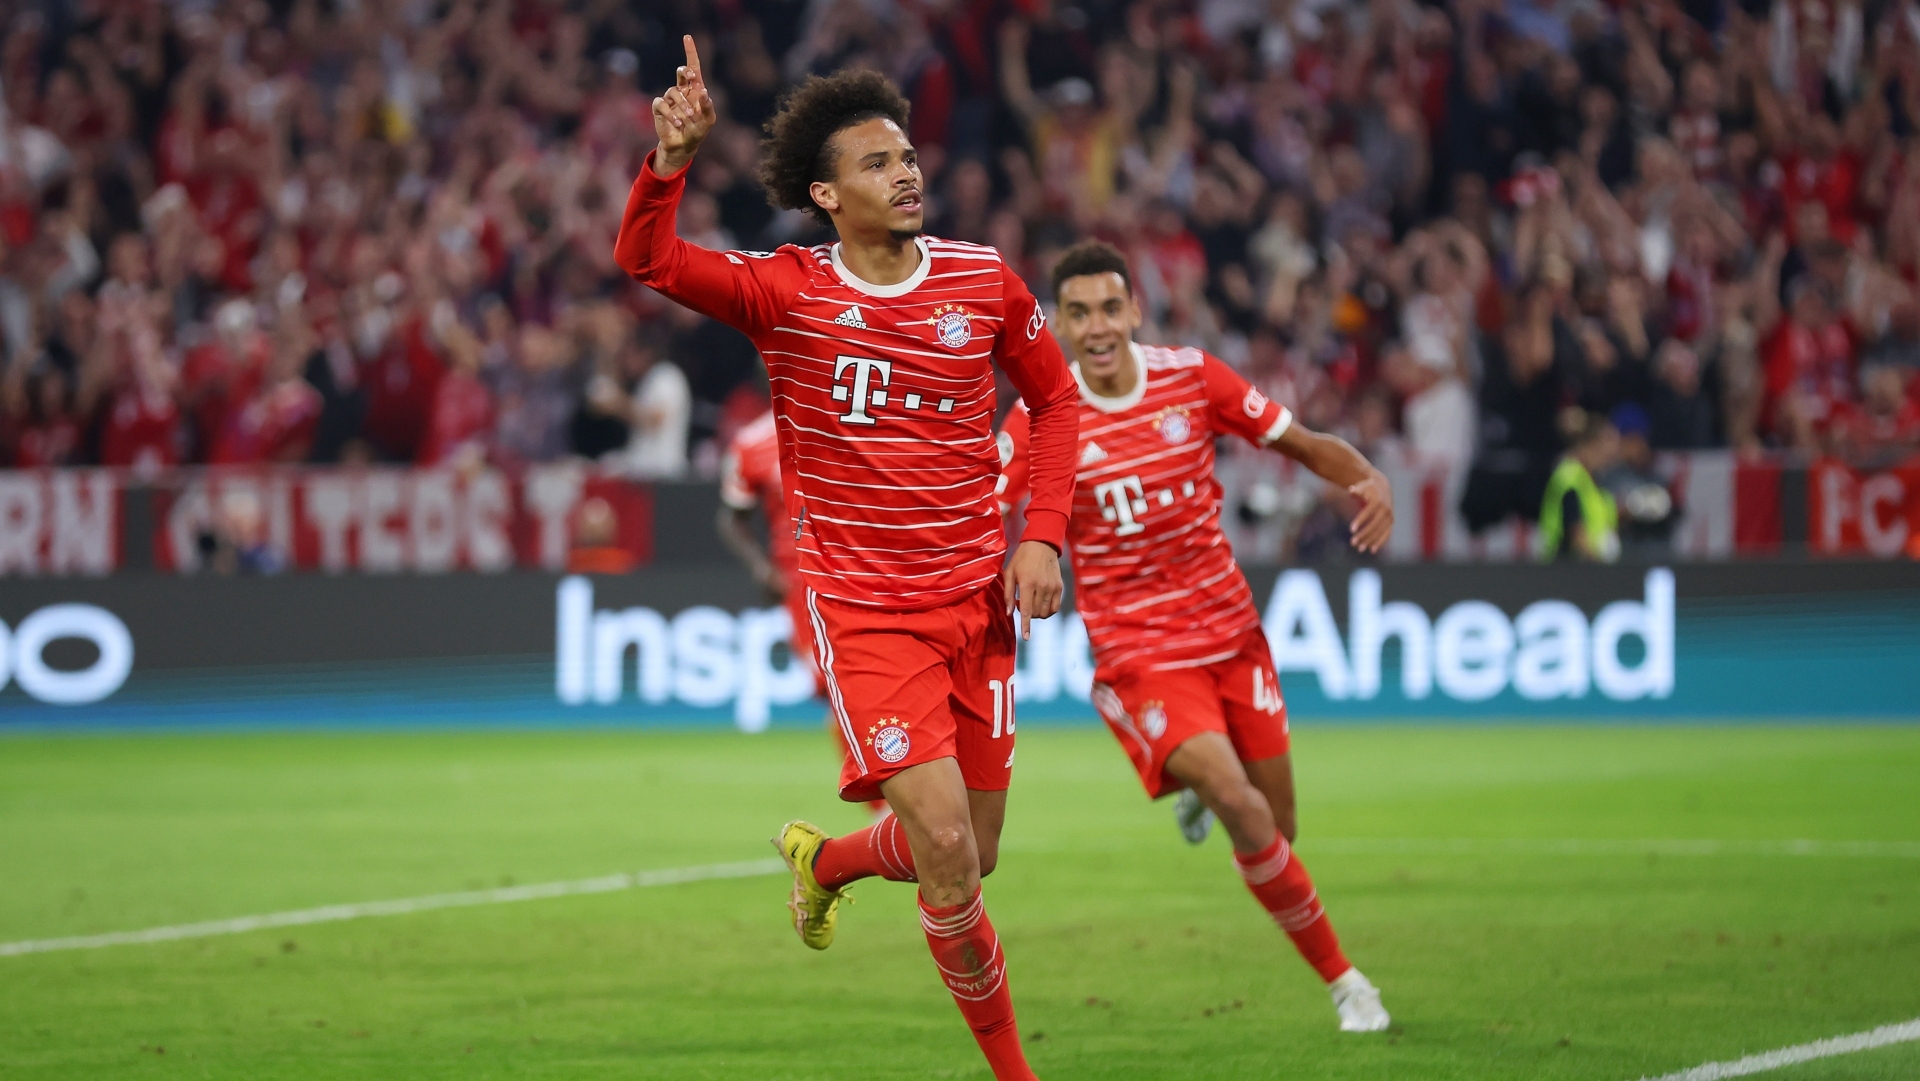 Bayern Munich vs Bayer Leverkusen: Live stream, TV channel, kick-off time & where to watch | Goal.com